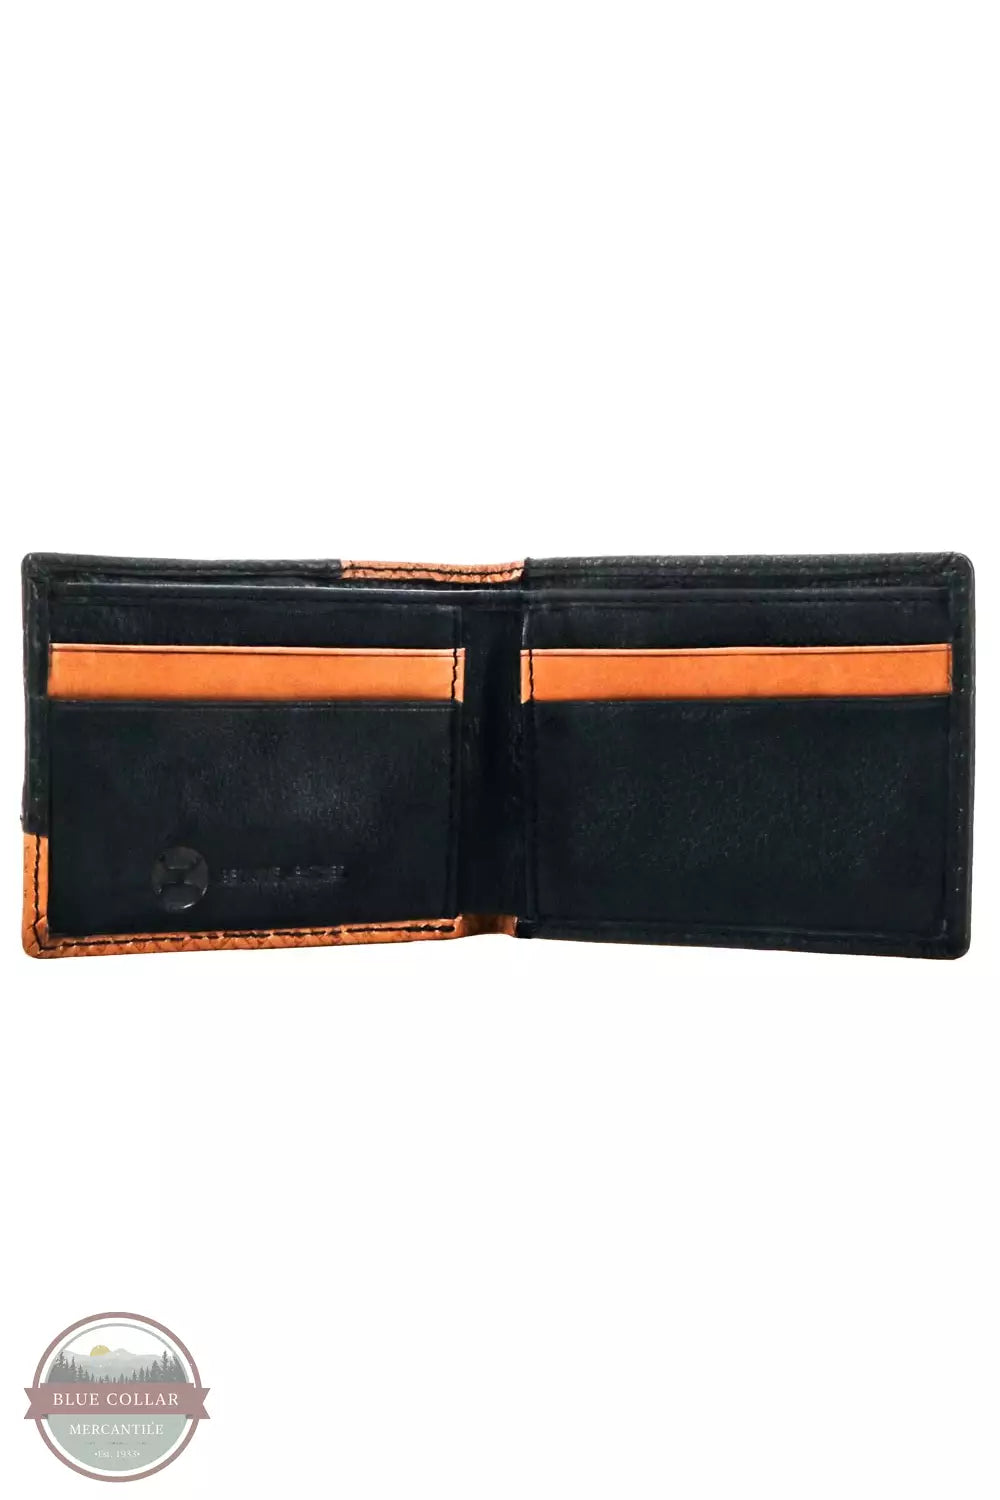 Hooey HFBF002-TNBR Hands Up Basket Weave Front Pocket Bifold Wallet in Tan with Black Leather Inside View